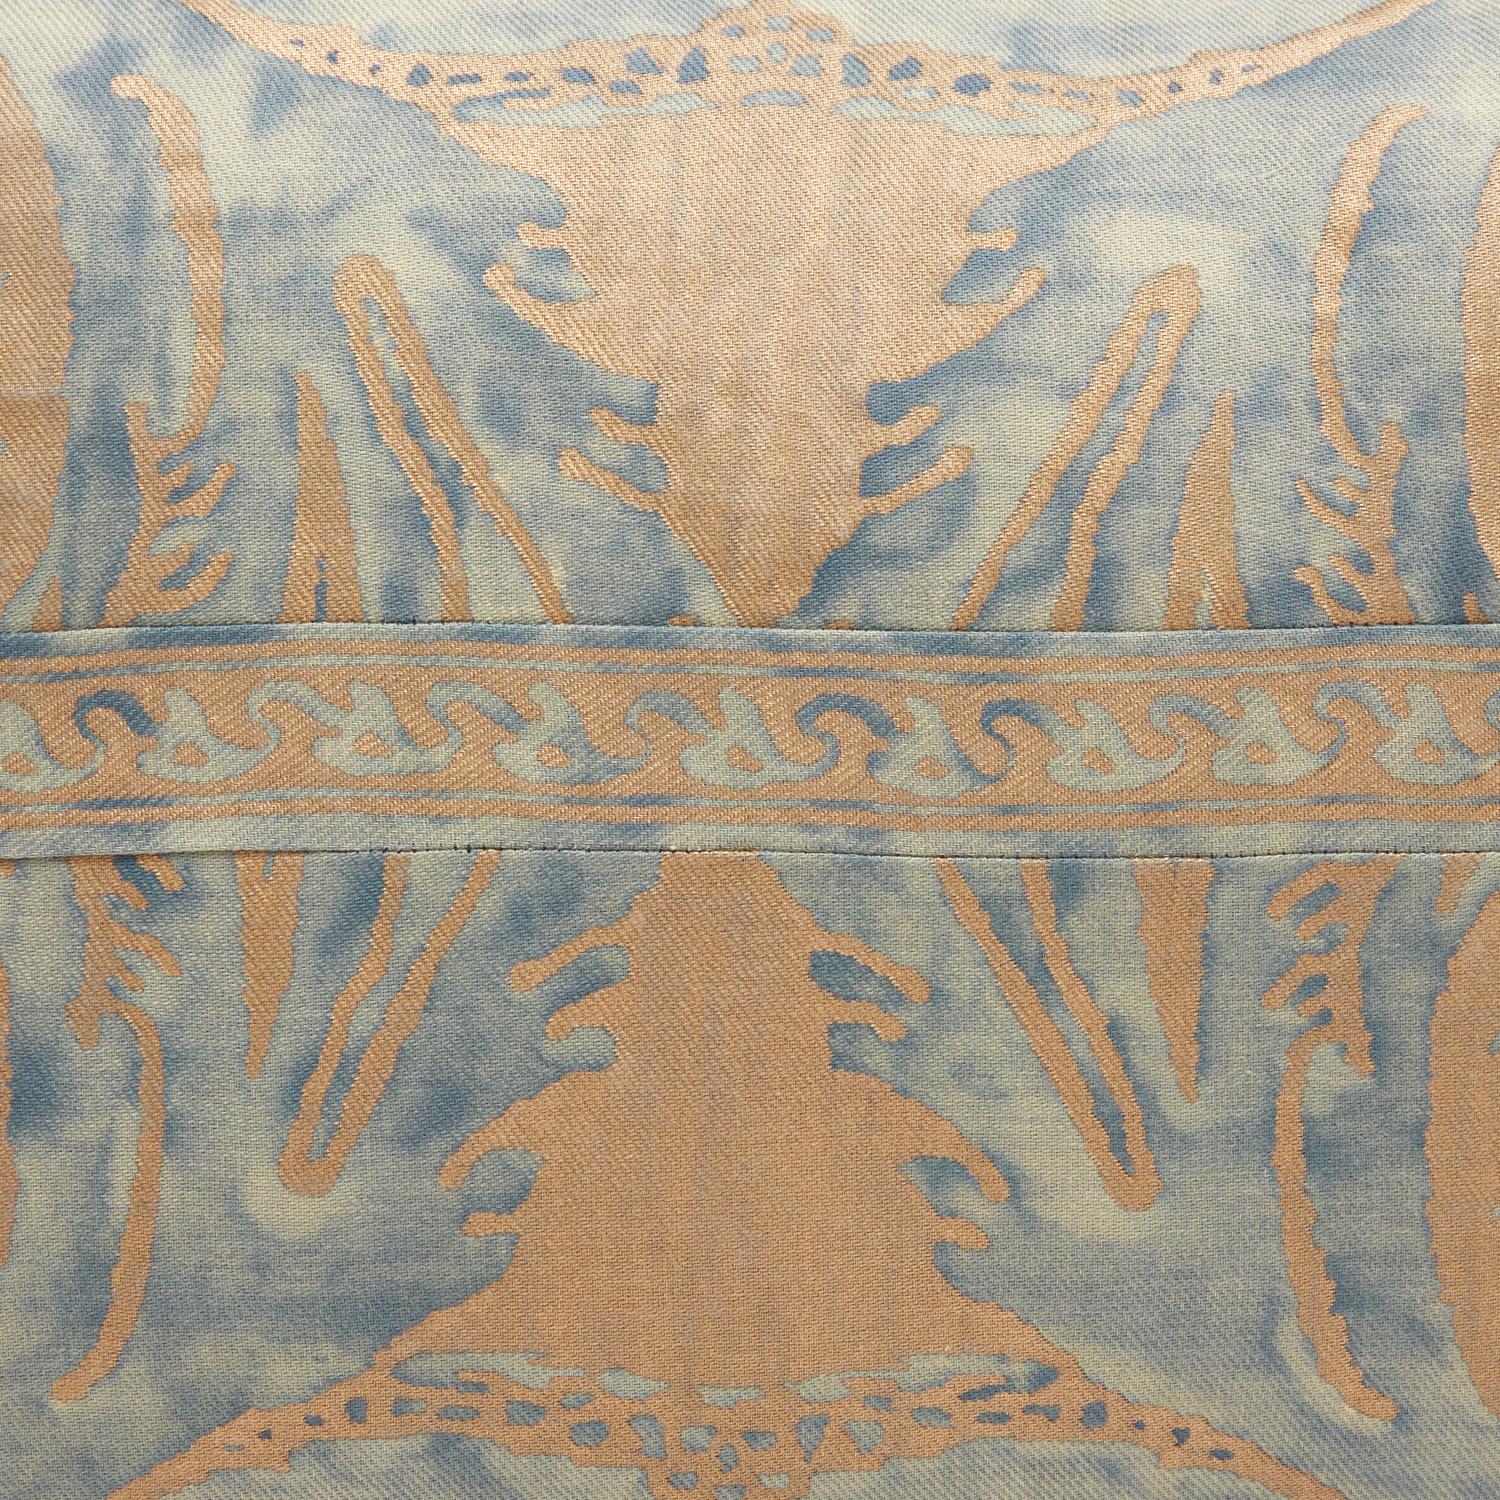 American Rectangular Fortuny Fabric Cushion in the Glicine Pattern